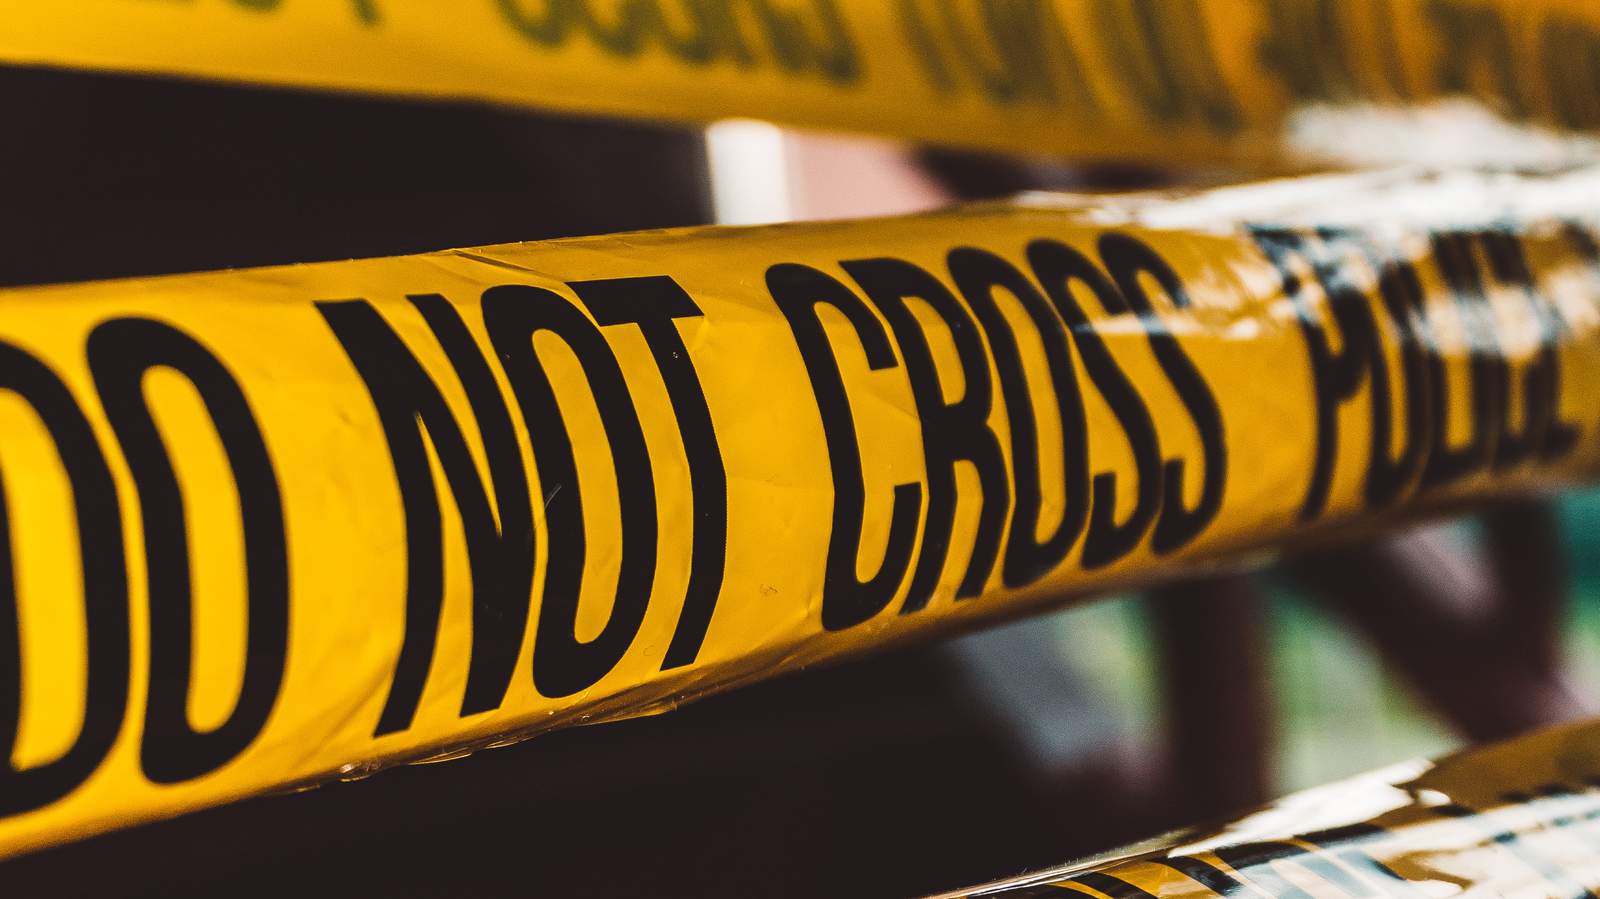 2 women found dead in Orange County apartment